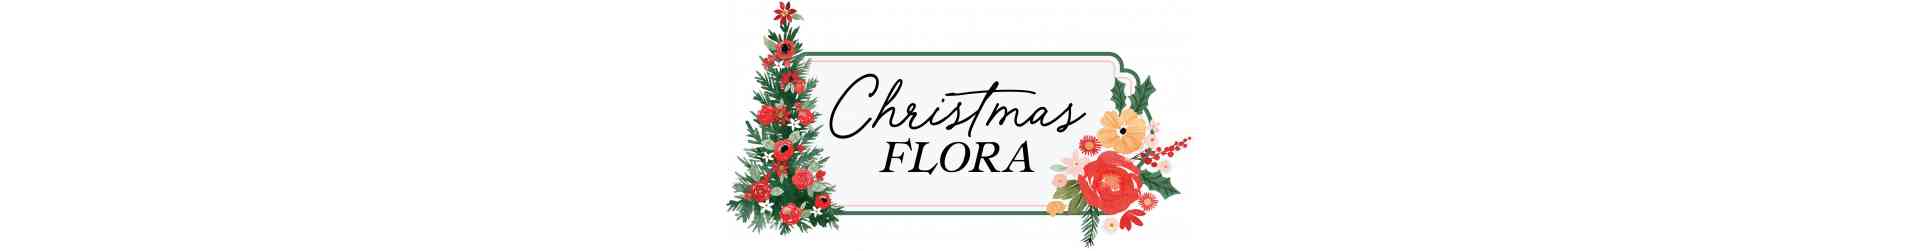 Peaceful Christmas Flora